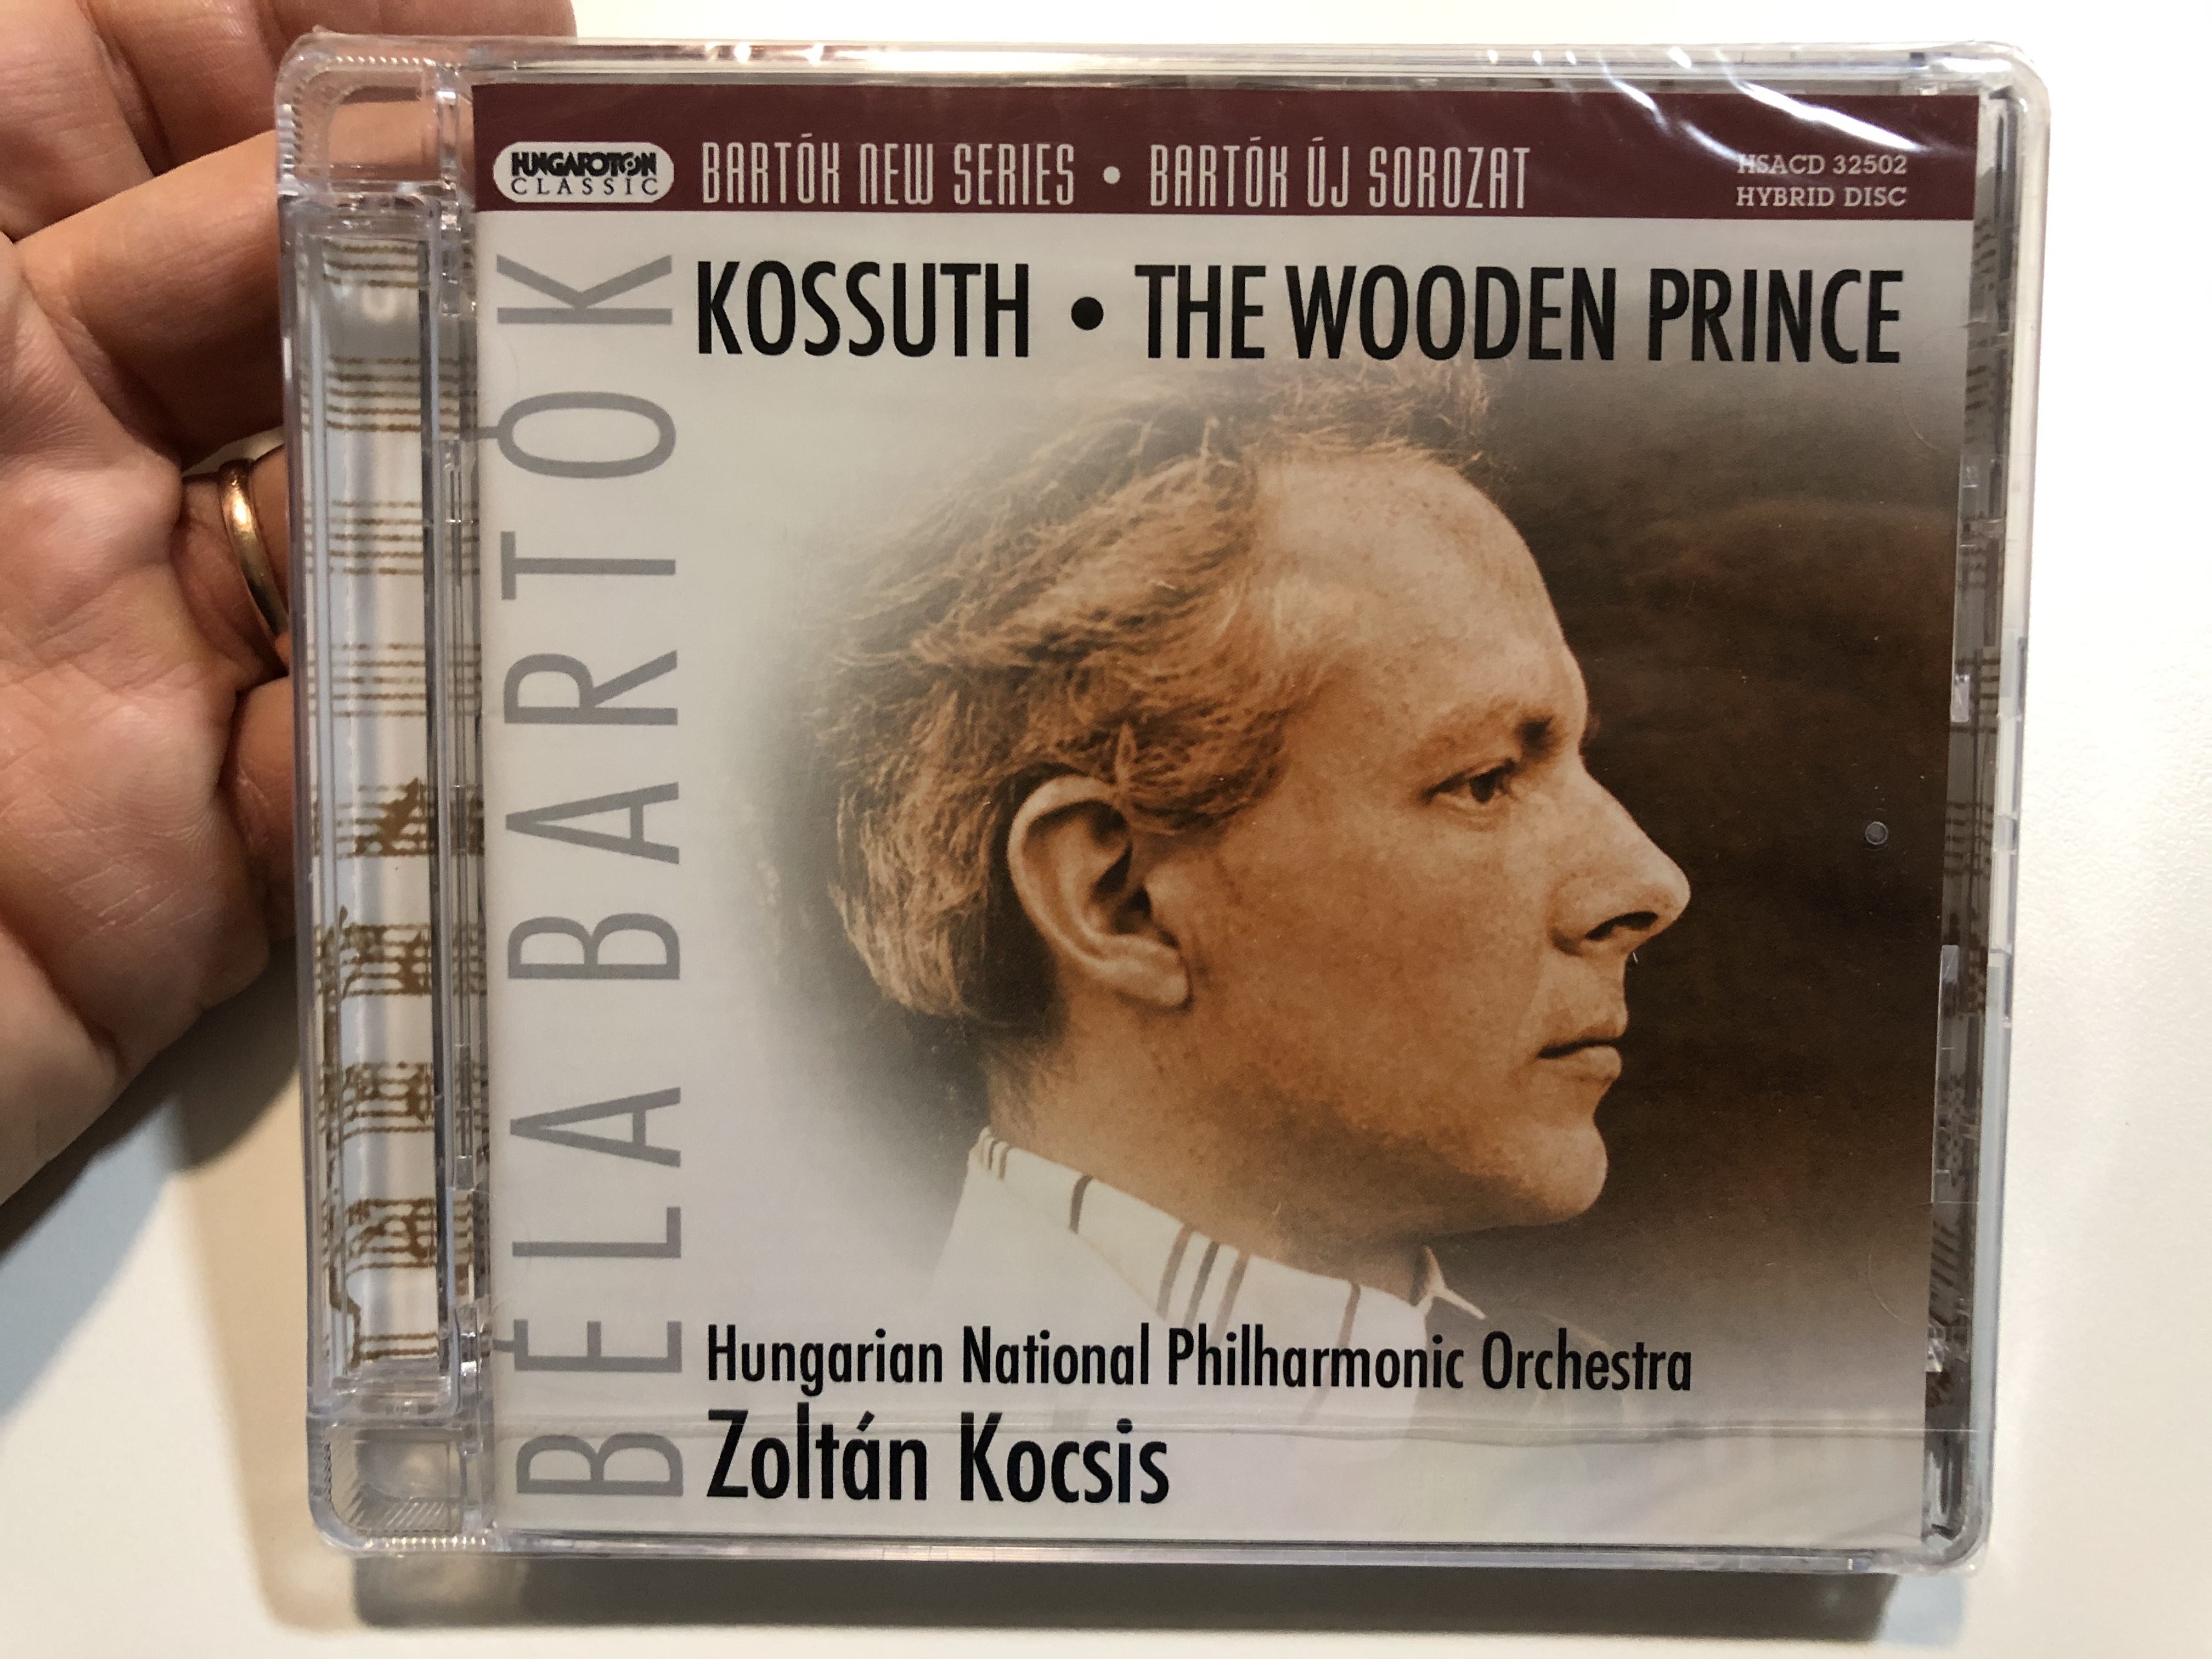 b-la-bart-k-kossuth-the-wooden-prince-hungarian-national-philharmonic-orchestra-zolt-n-kocsis-bartok-new-series-hungaroton-classic-audio-cd-2006-stereo-hsacd-32502-1-.jpg